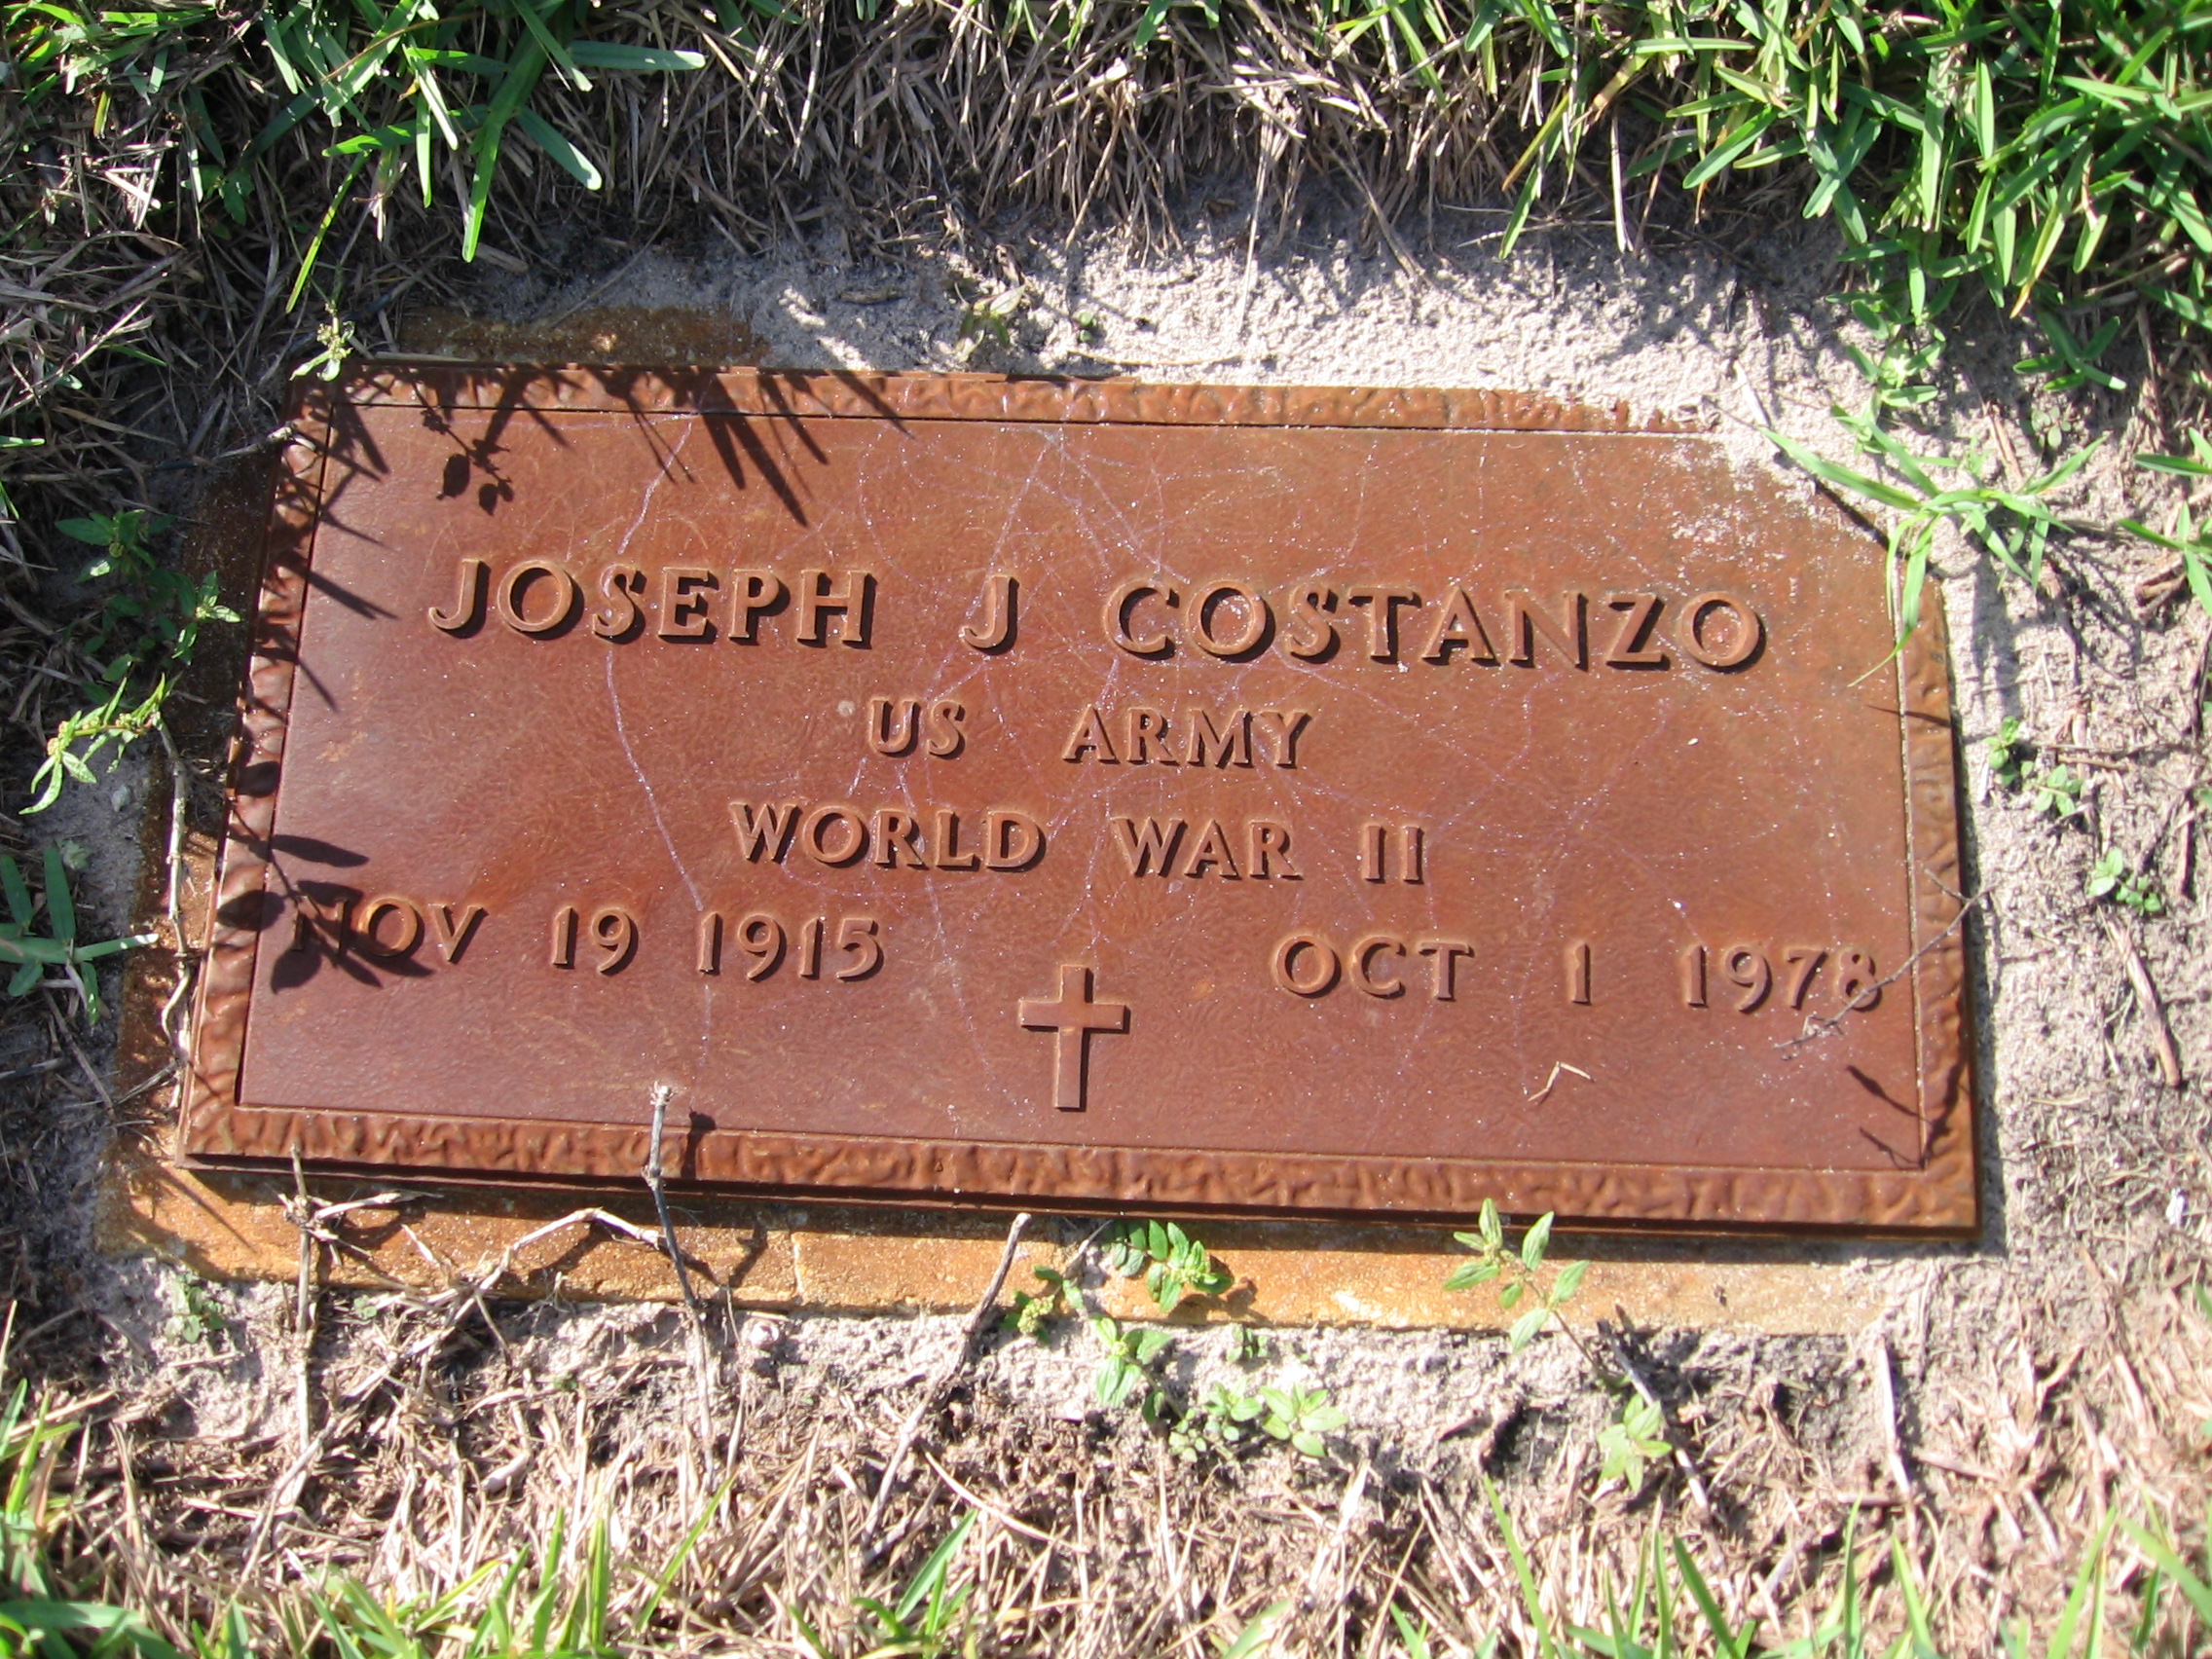 Joseph J Costanzo